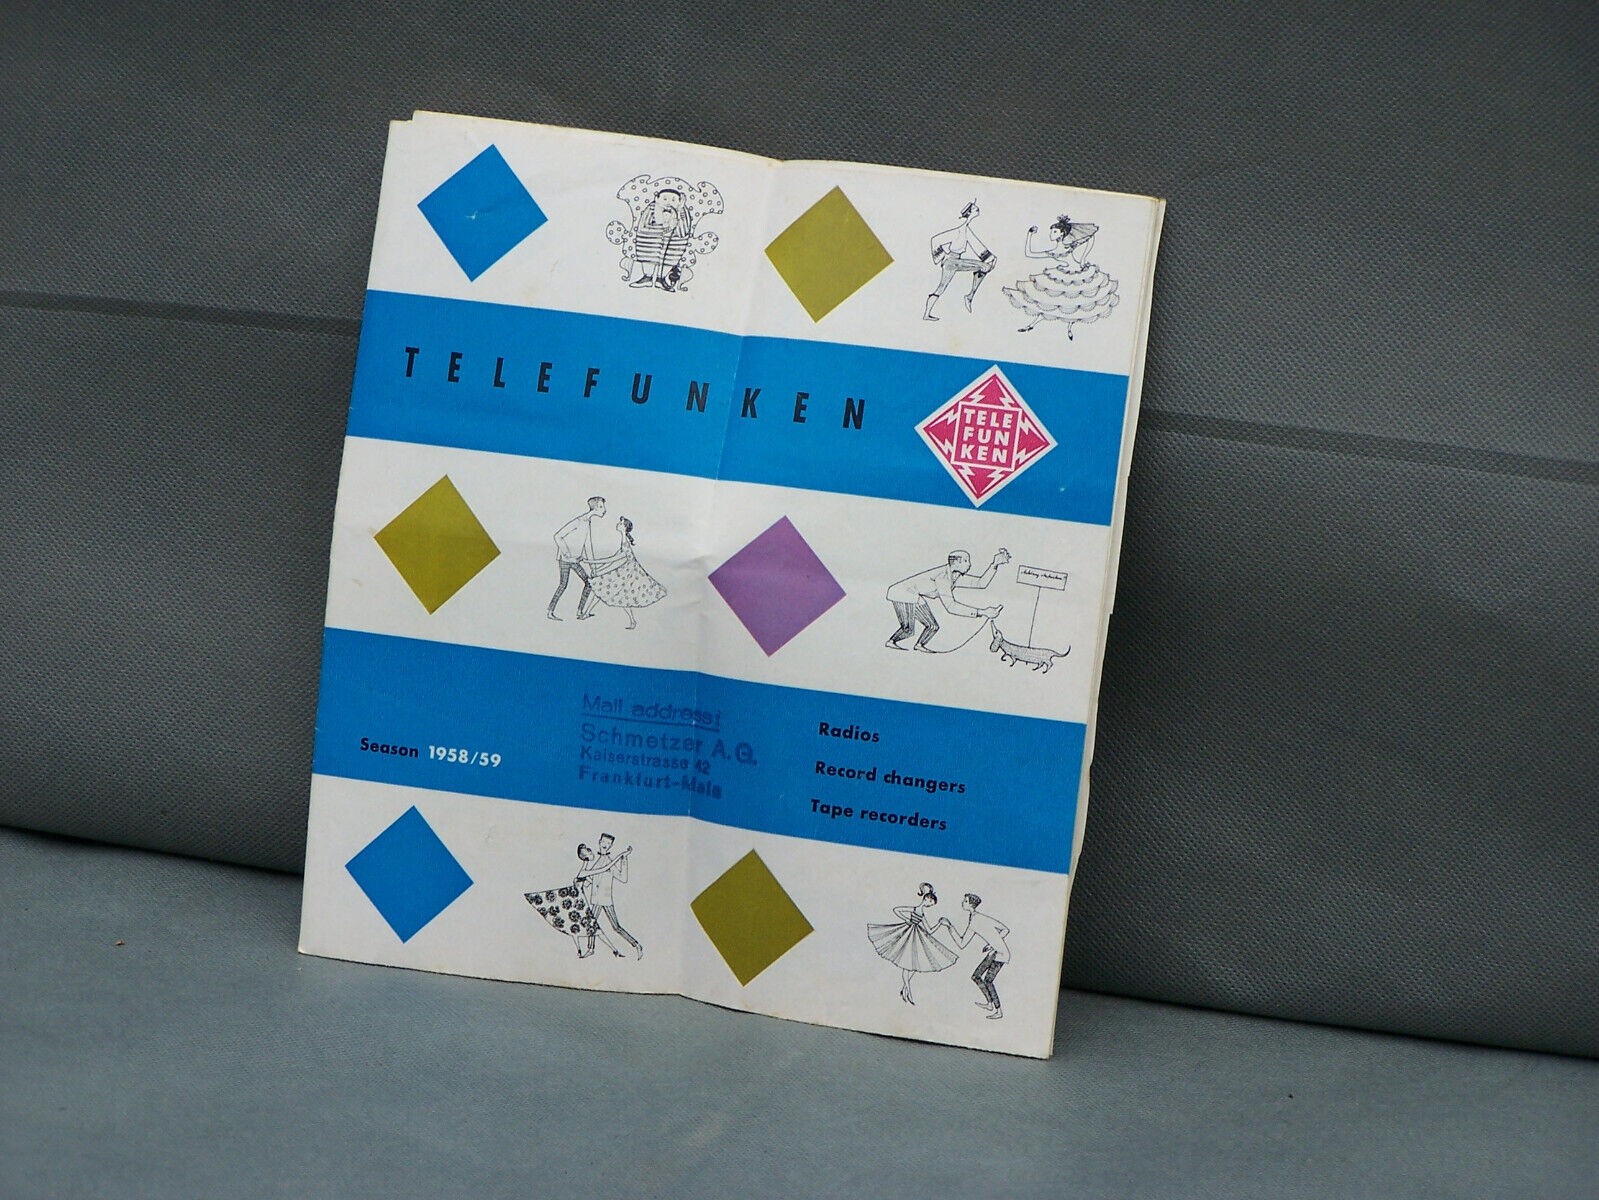 Telefunken Season 1958/59 Radios Record Changers Tape Recorders Brochure